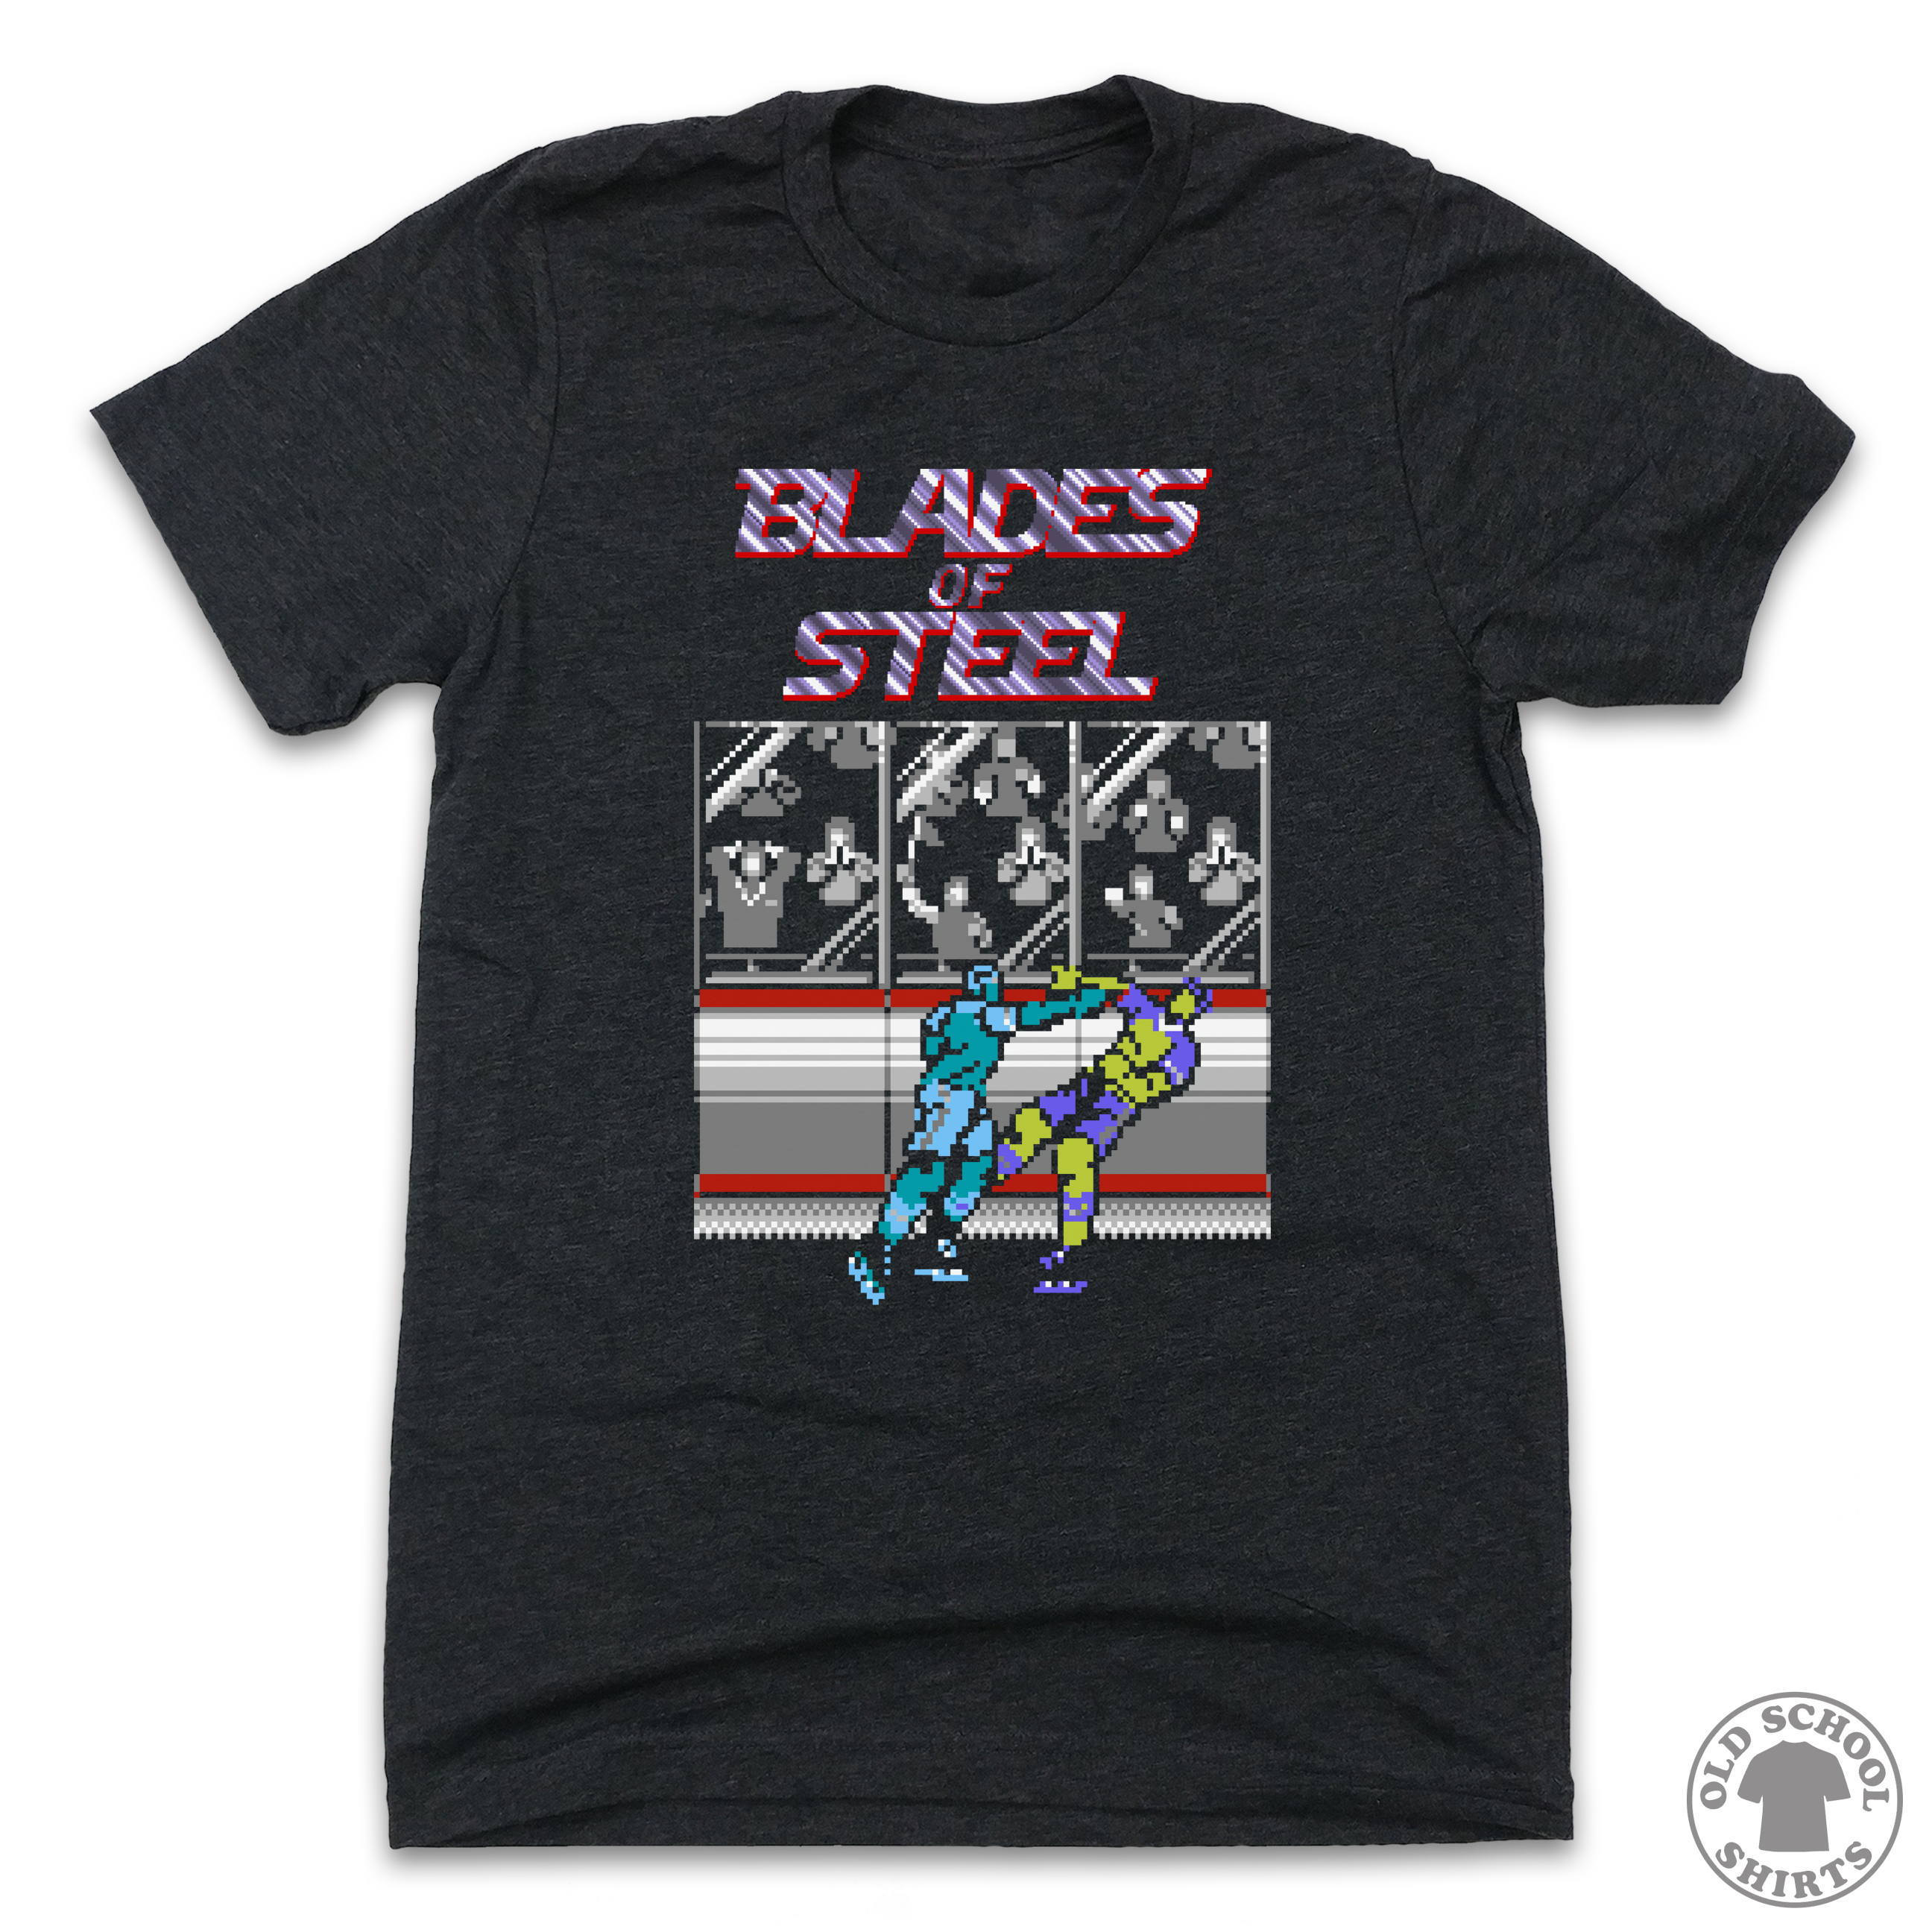 Blades of Steel - Old School Shirts- Retro Sports T Shirts